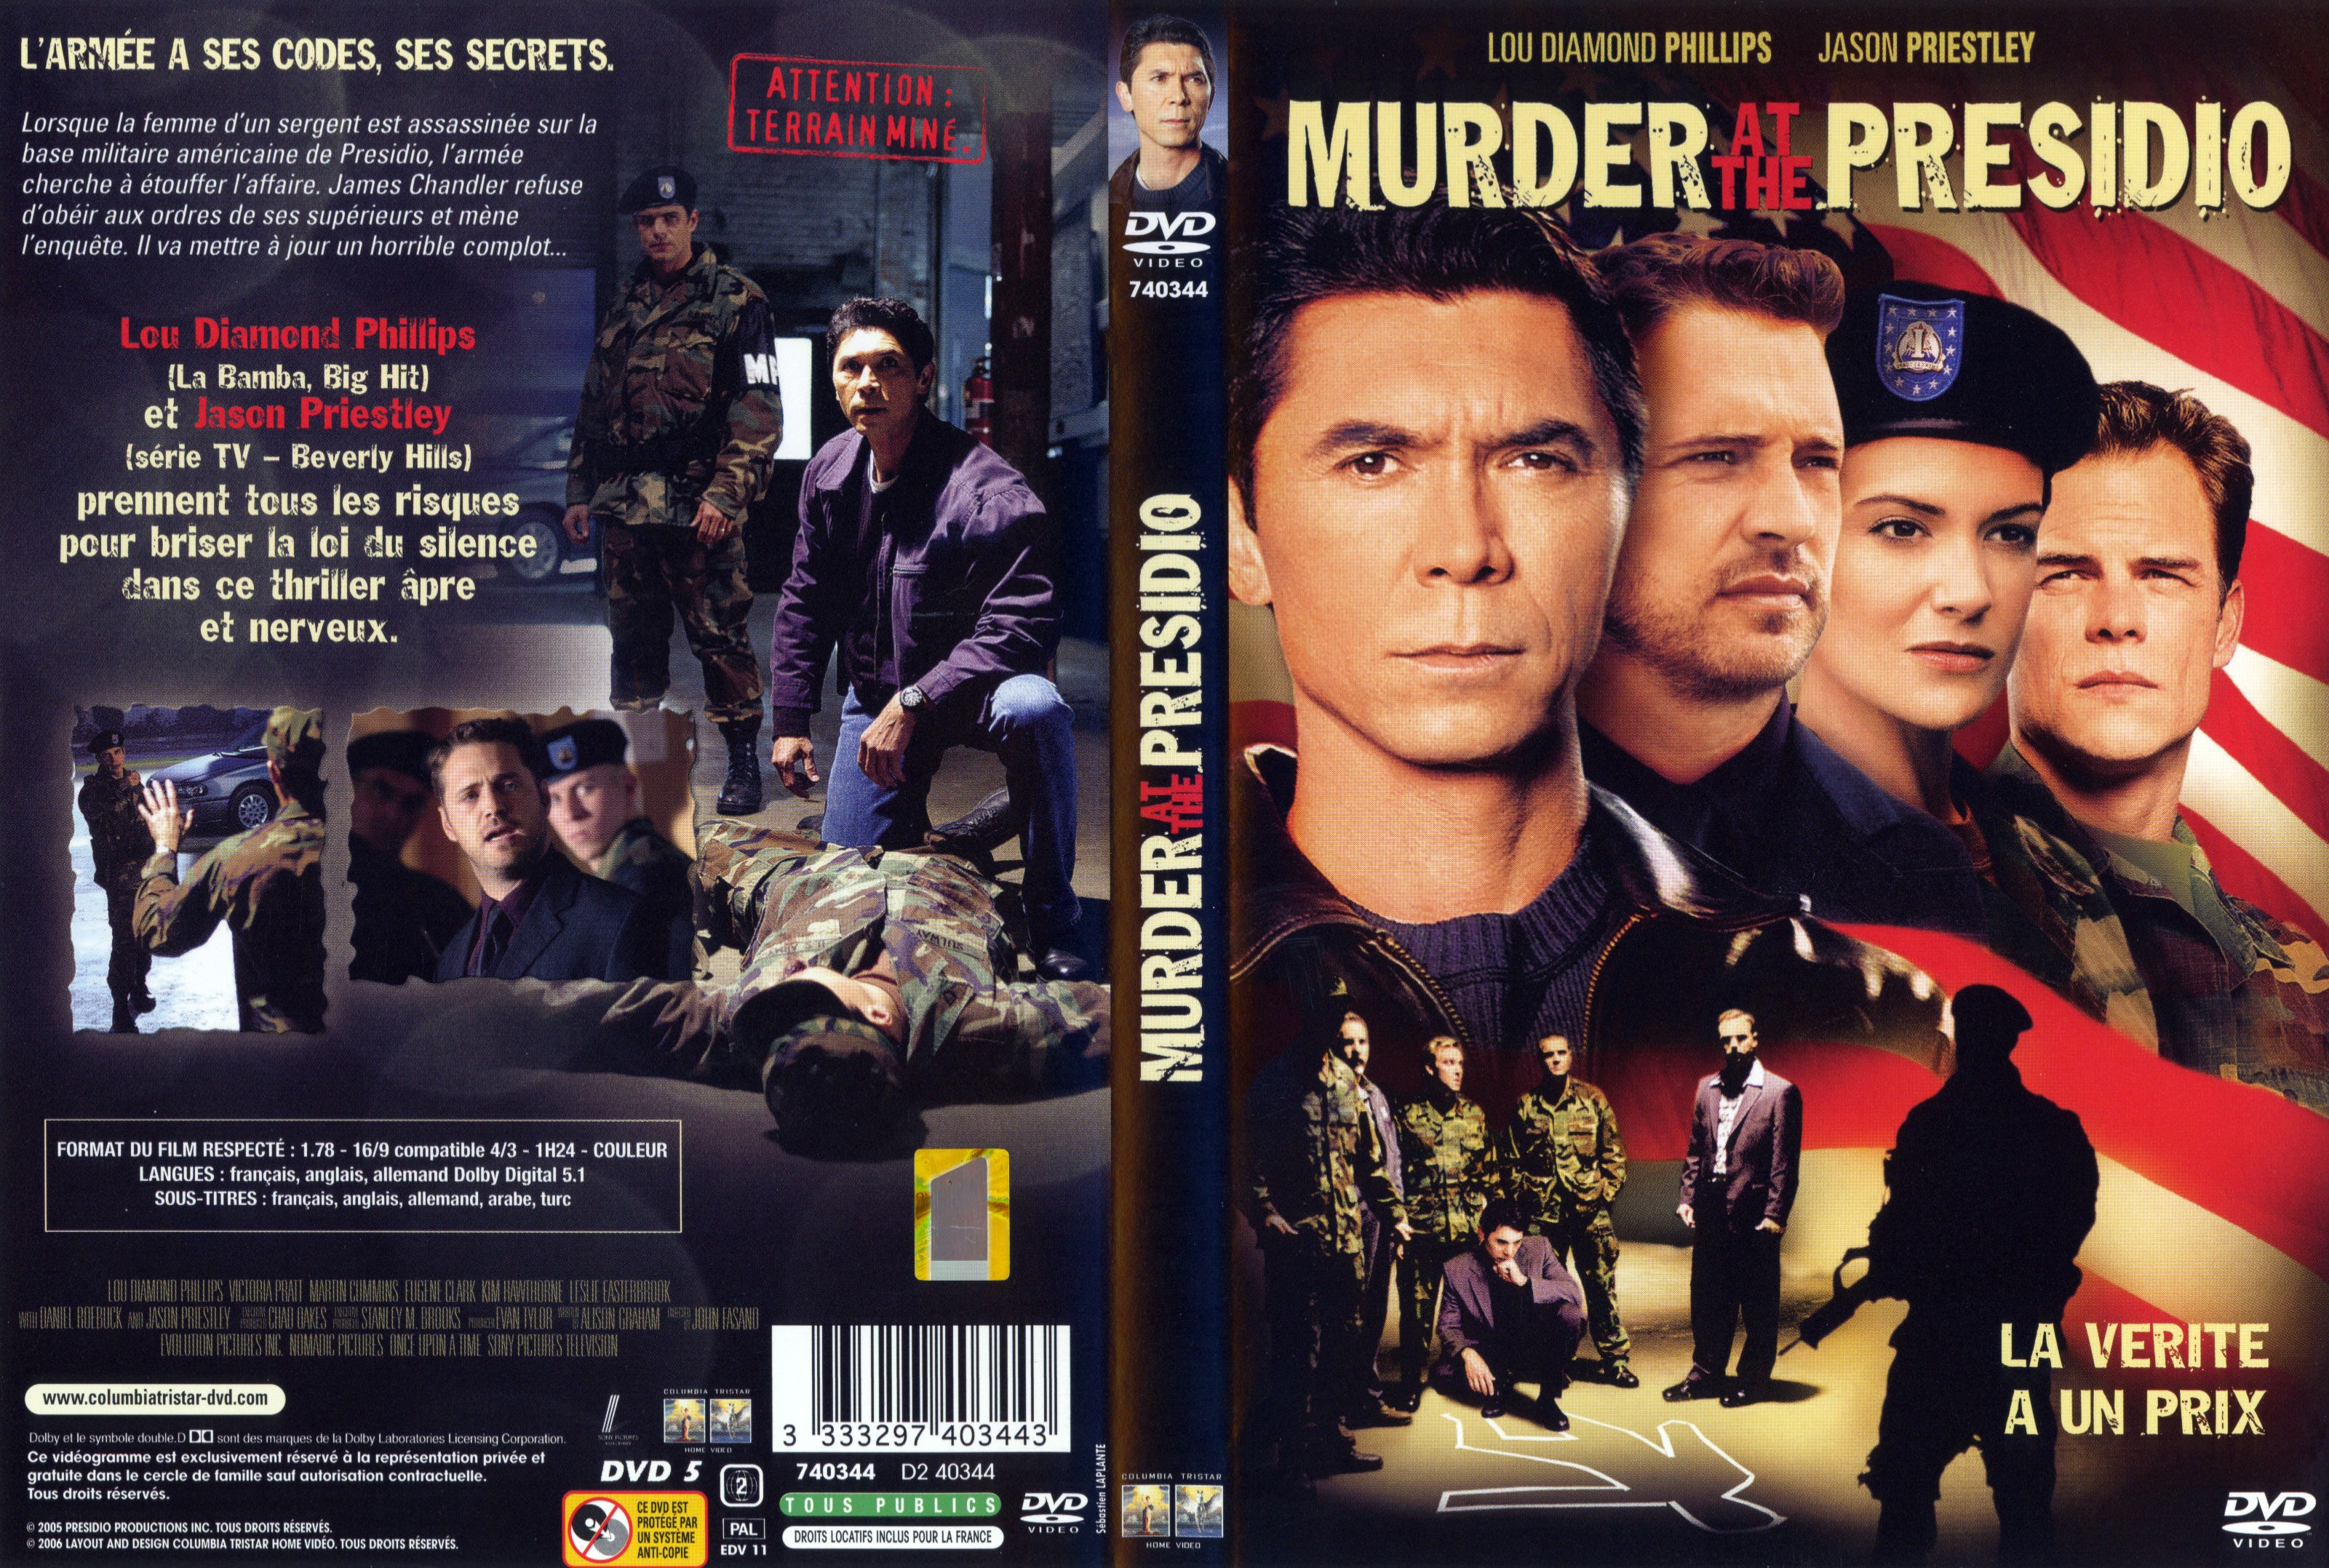 Jaquette DVD Murder at the presidio v2